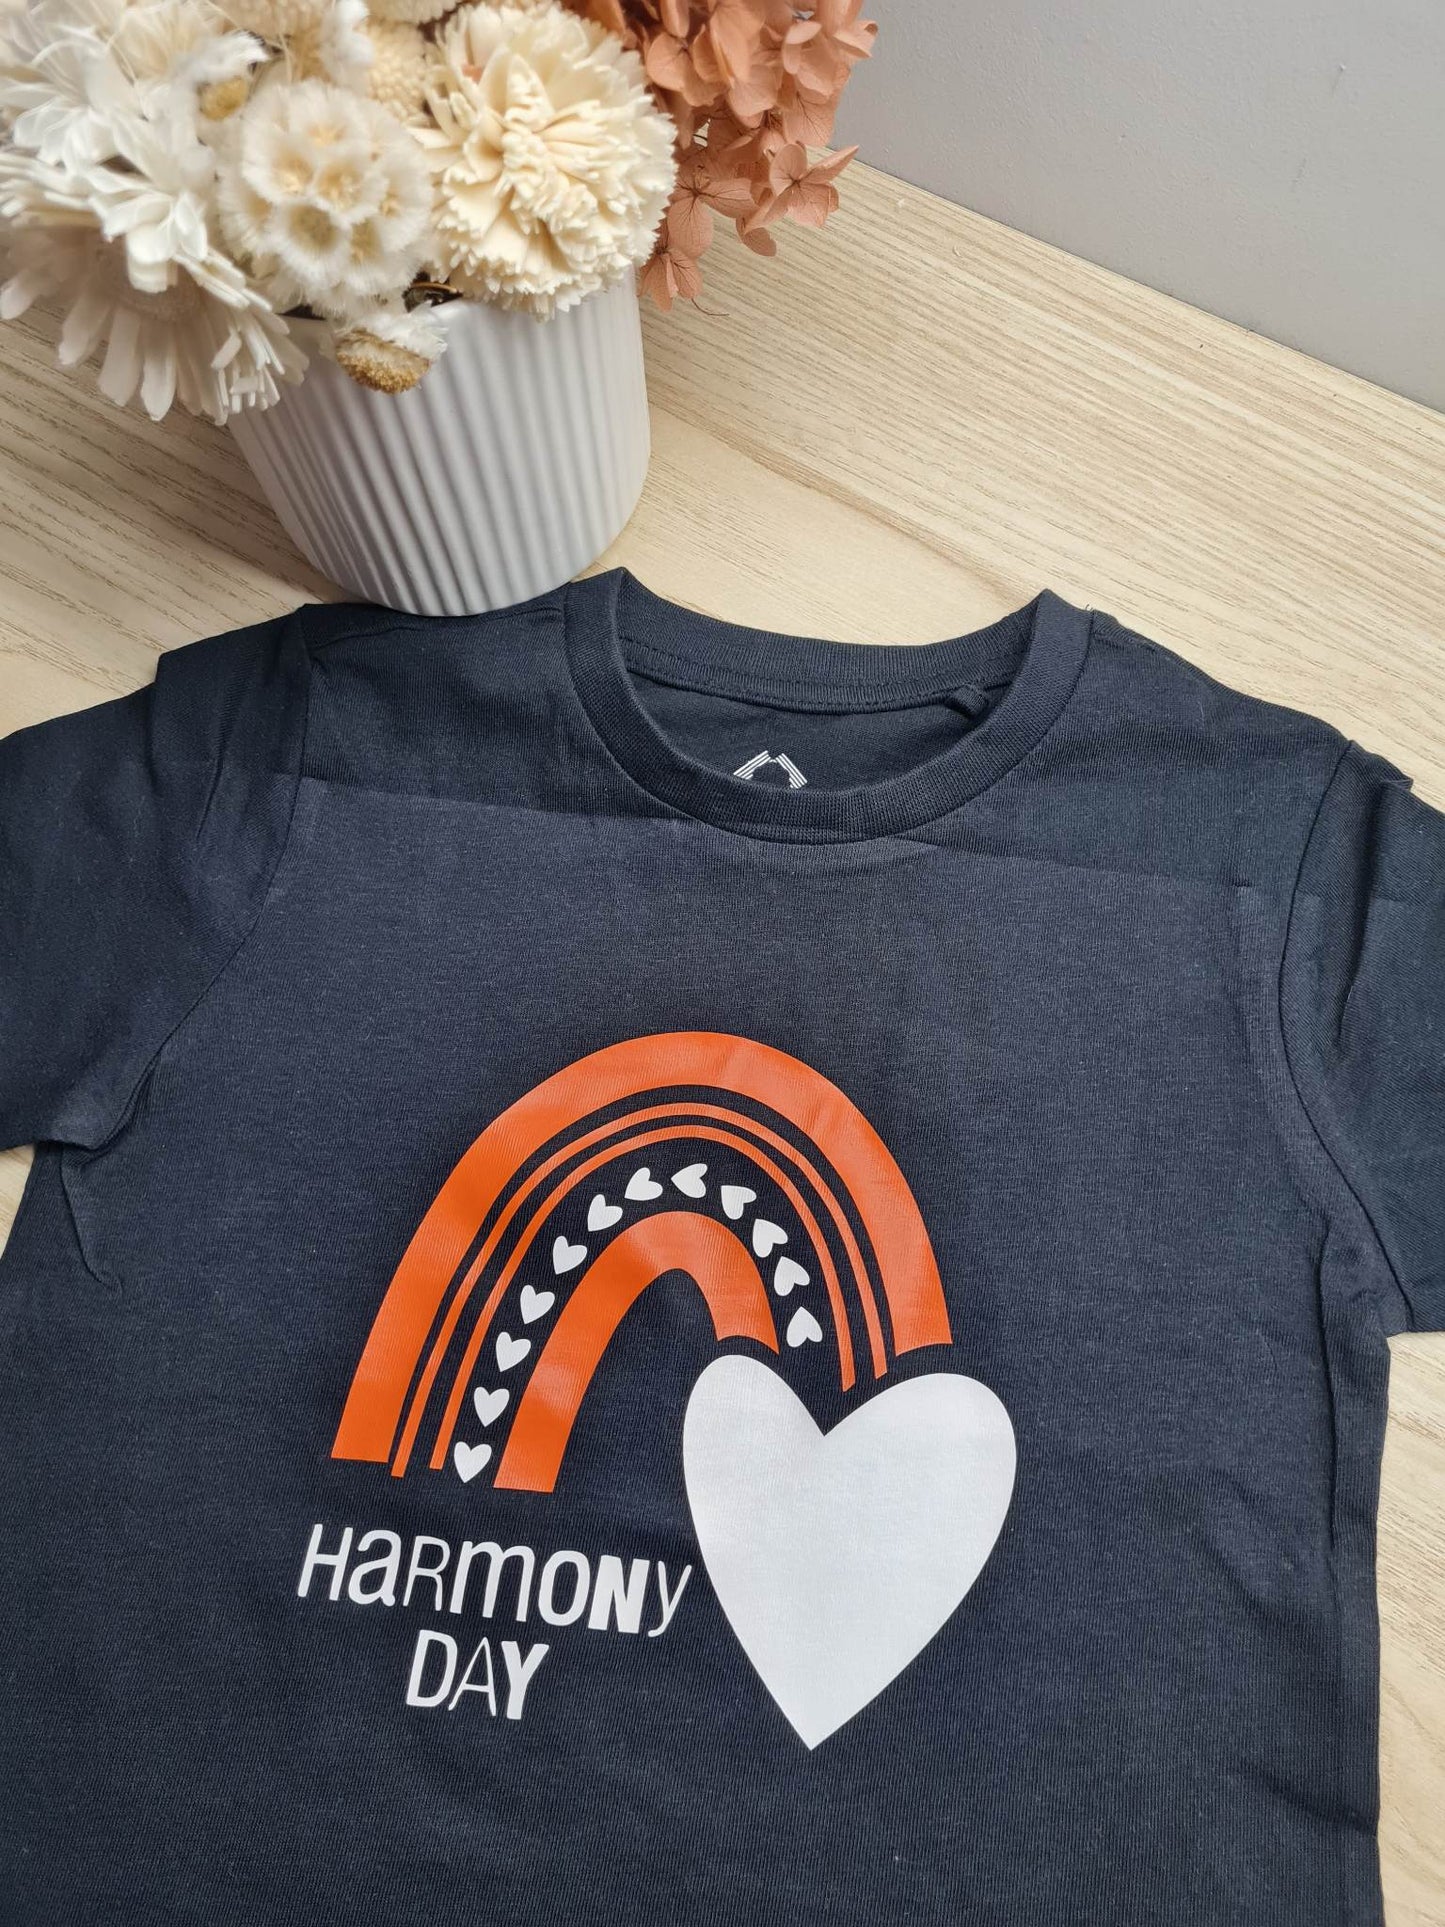 Kids Harmony Day Shirt - Rainbow